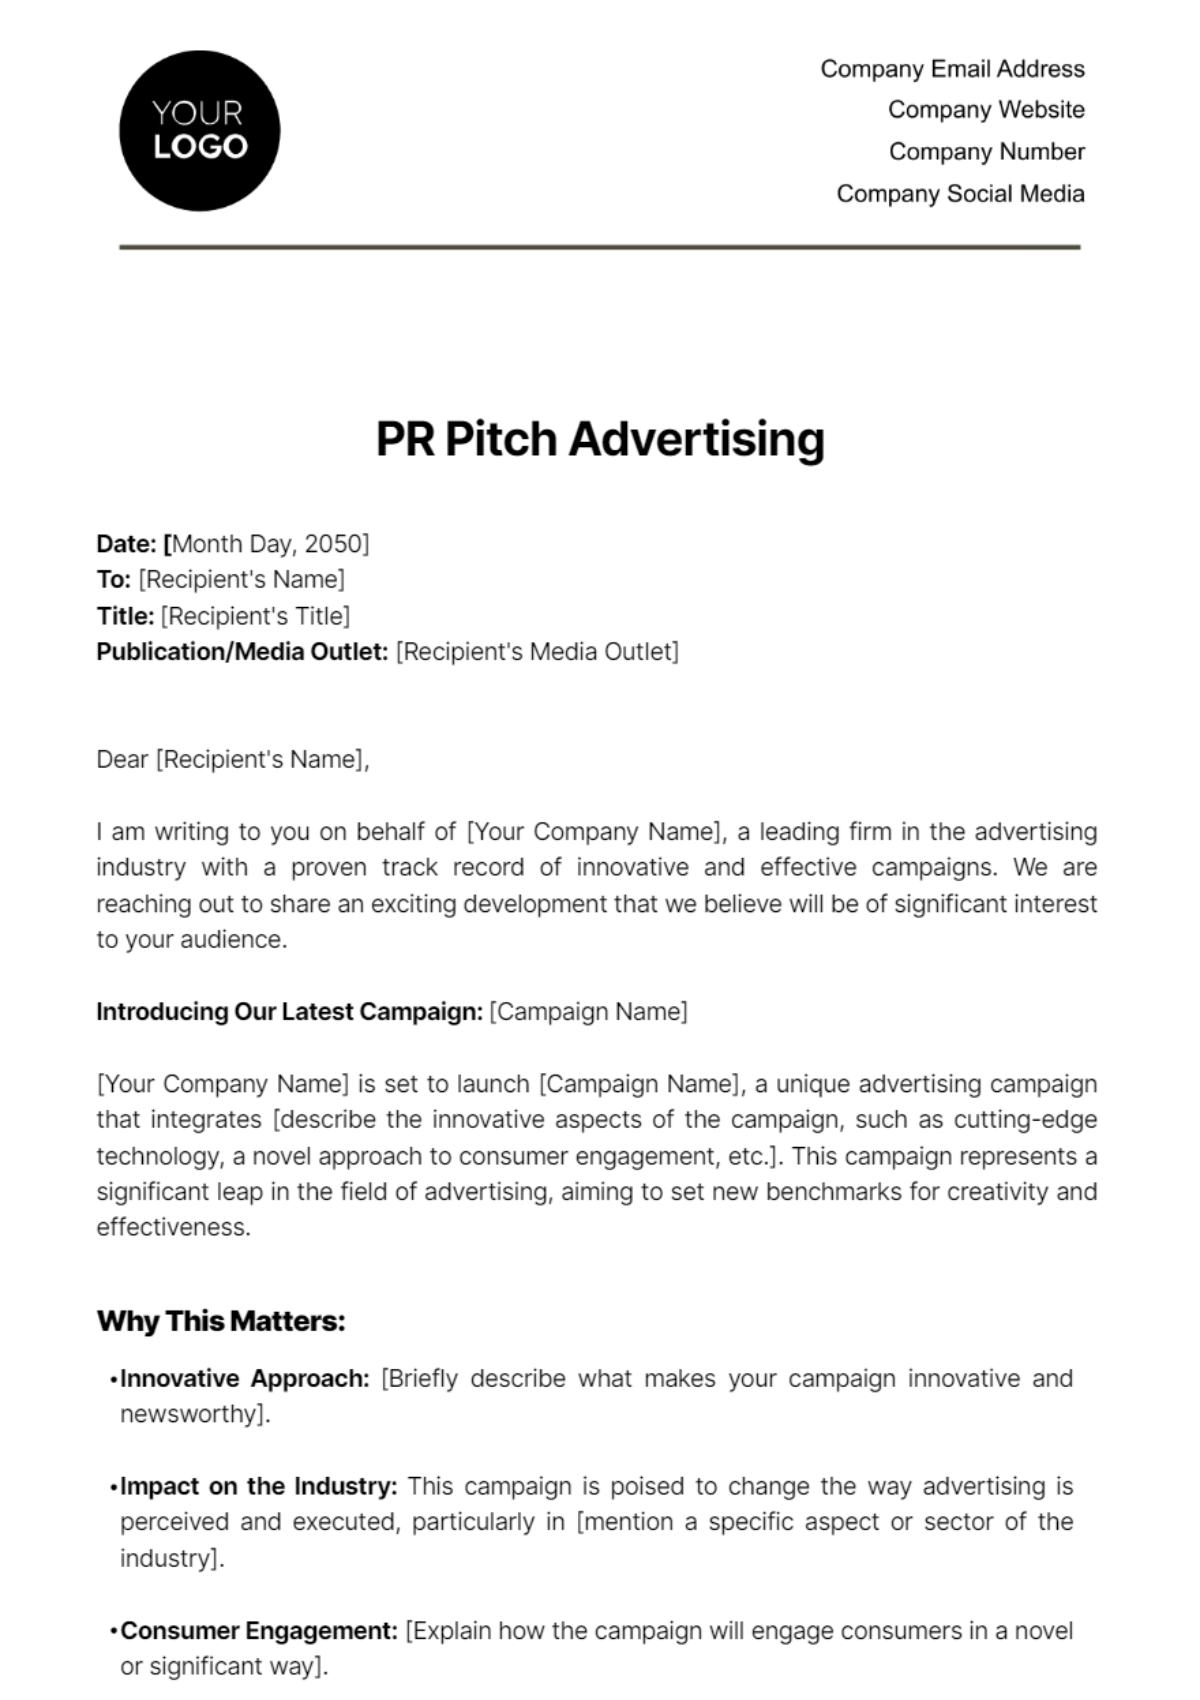 Free PR Pitch Advertising Template